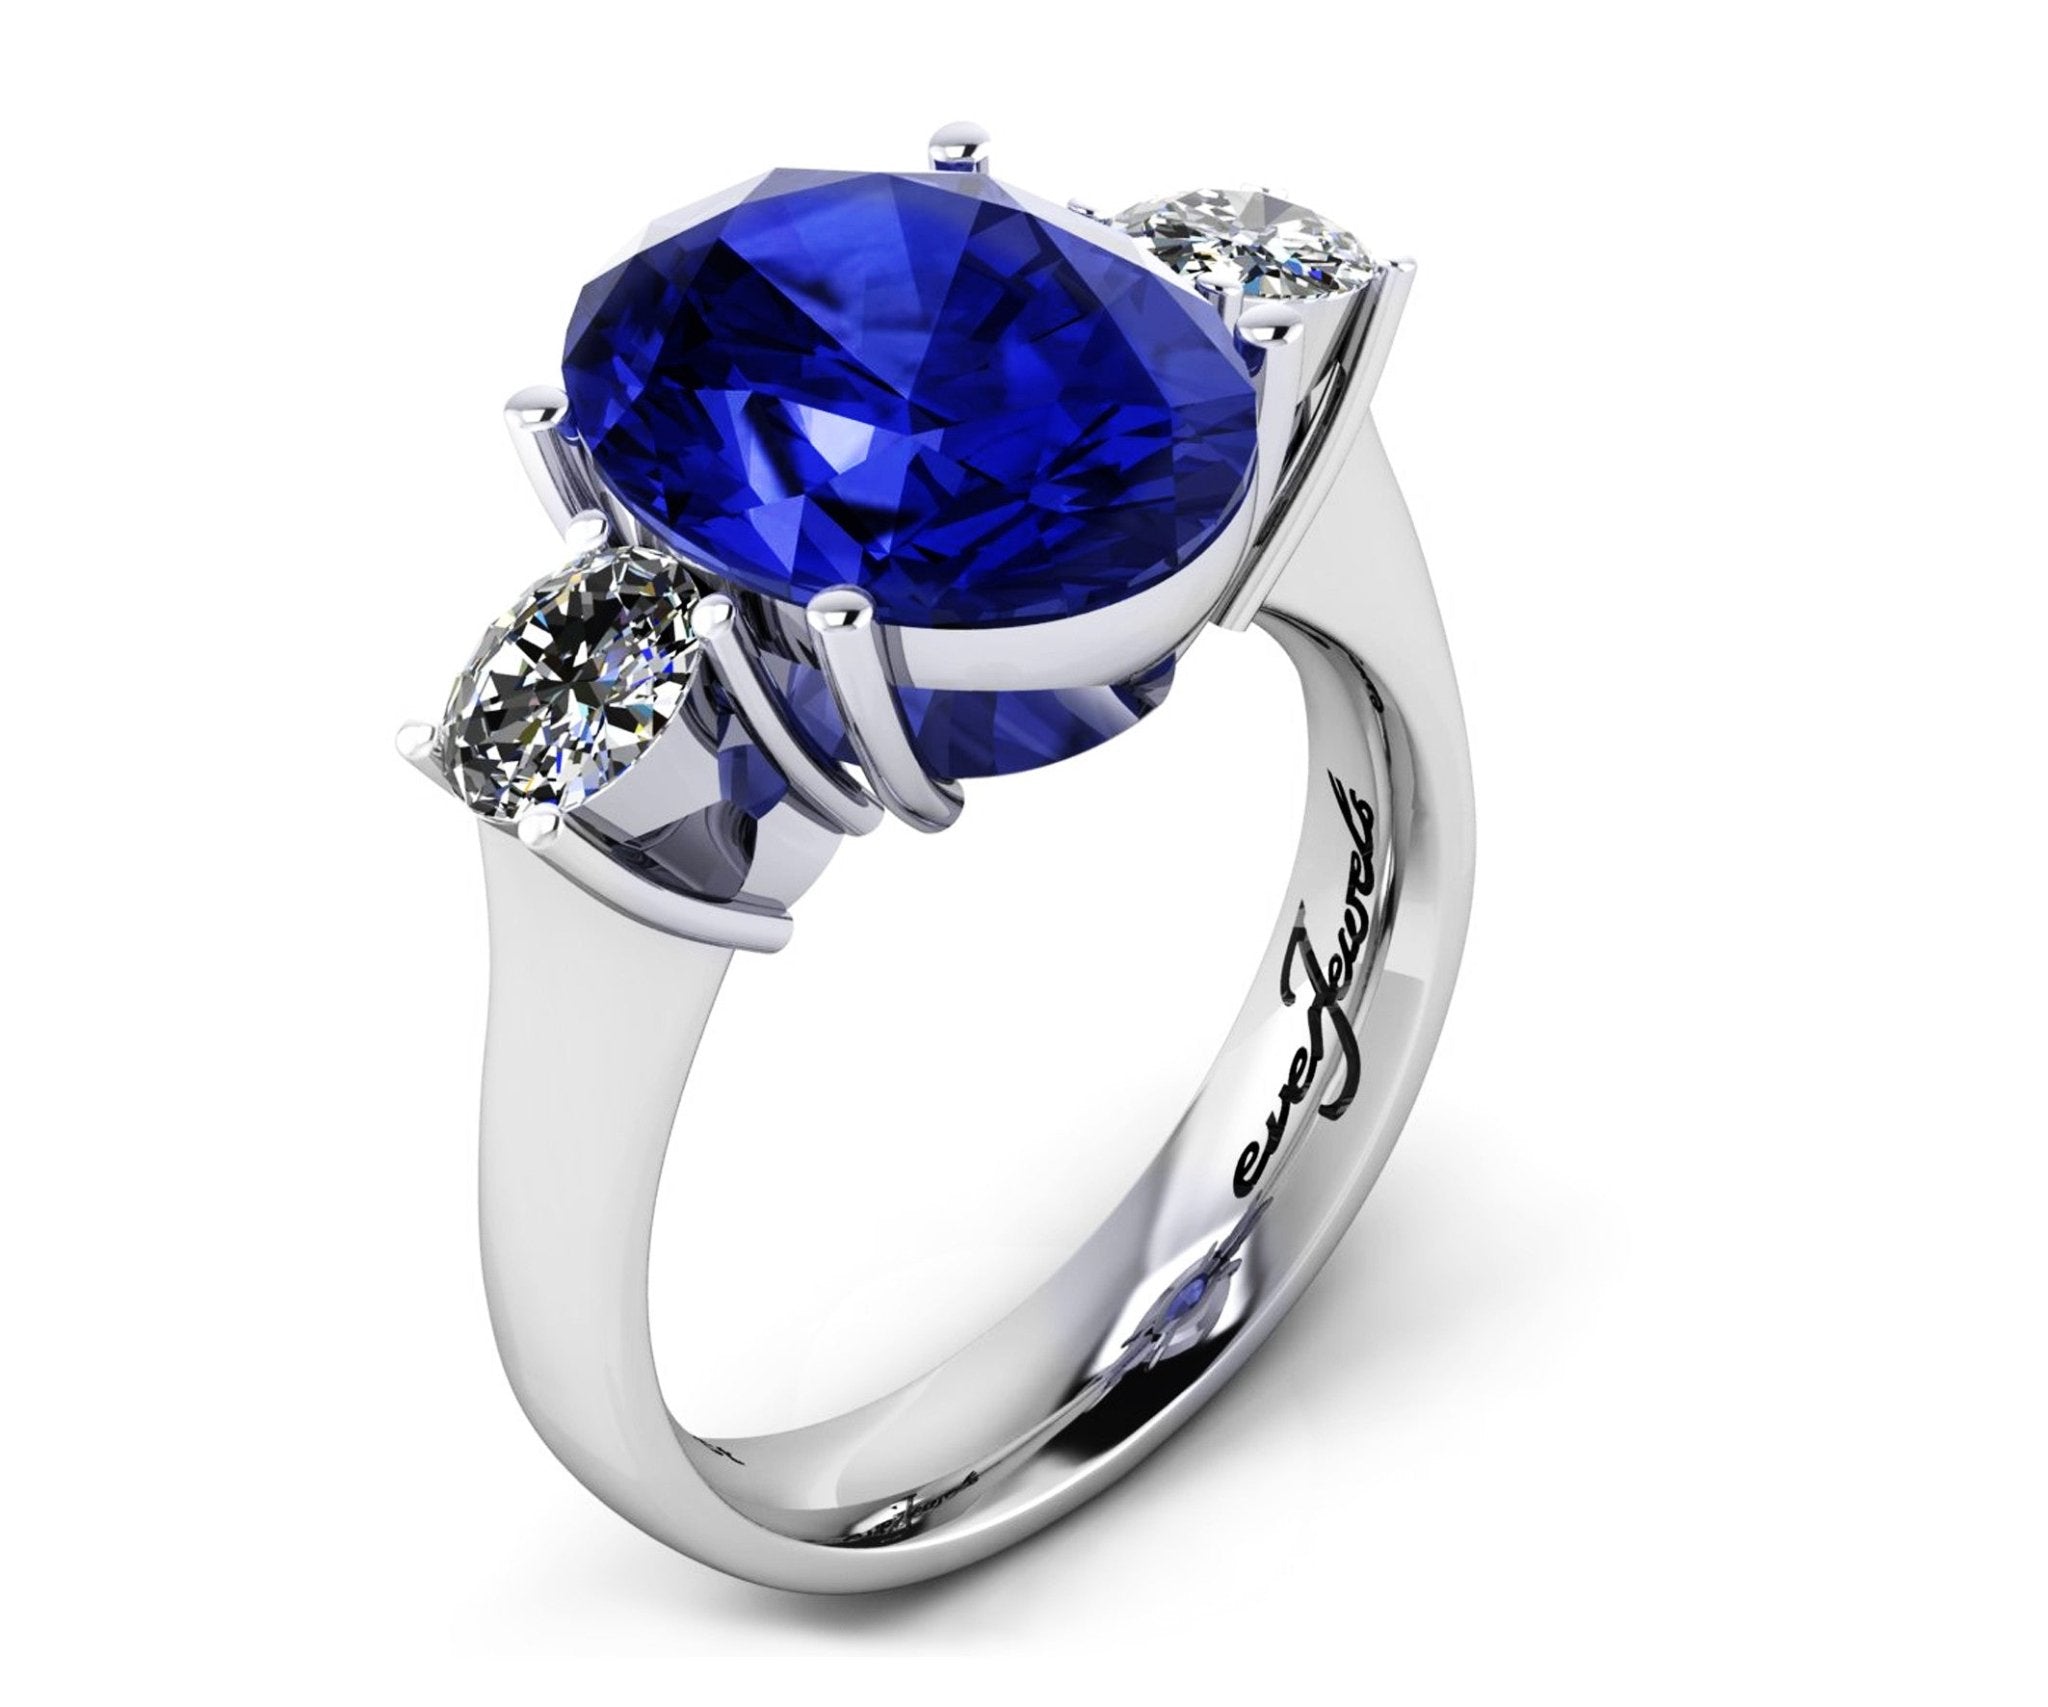 18ct White gold 5.54ct oval tanzanite and diamond dress ring - ForeverJewels Design Studio 8